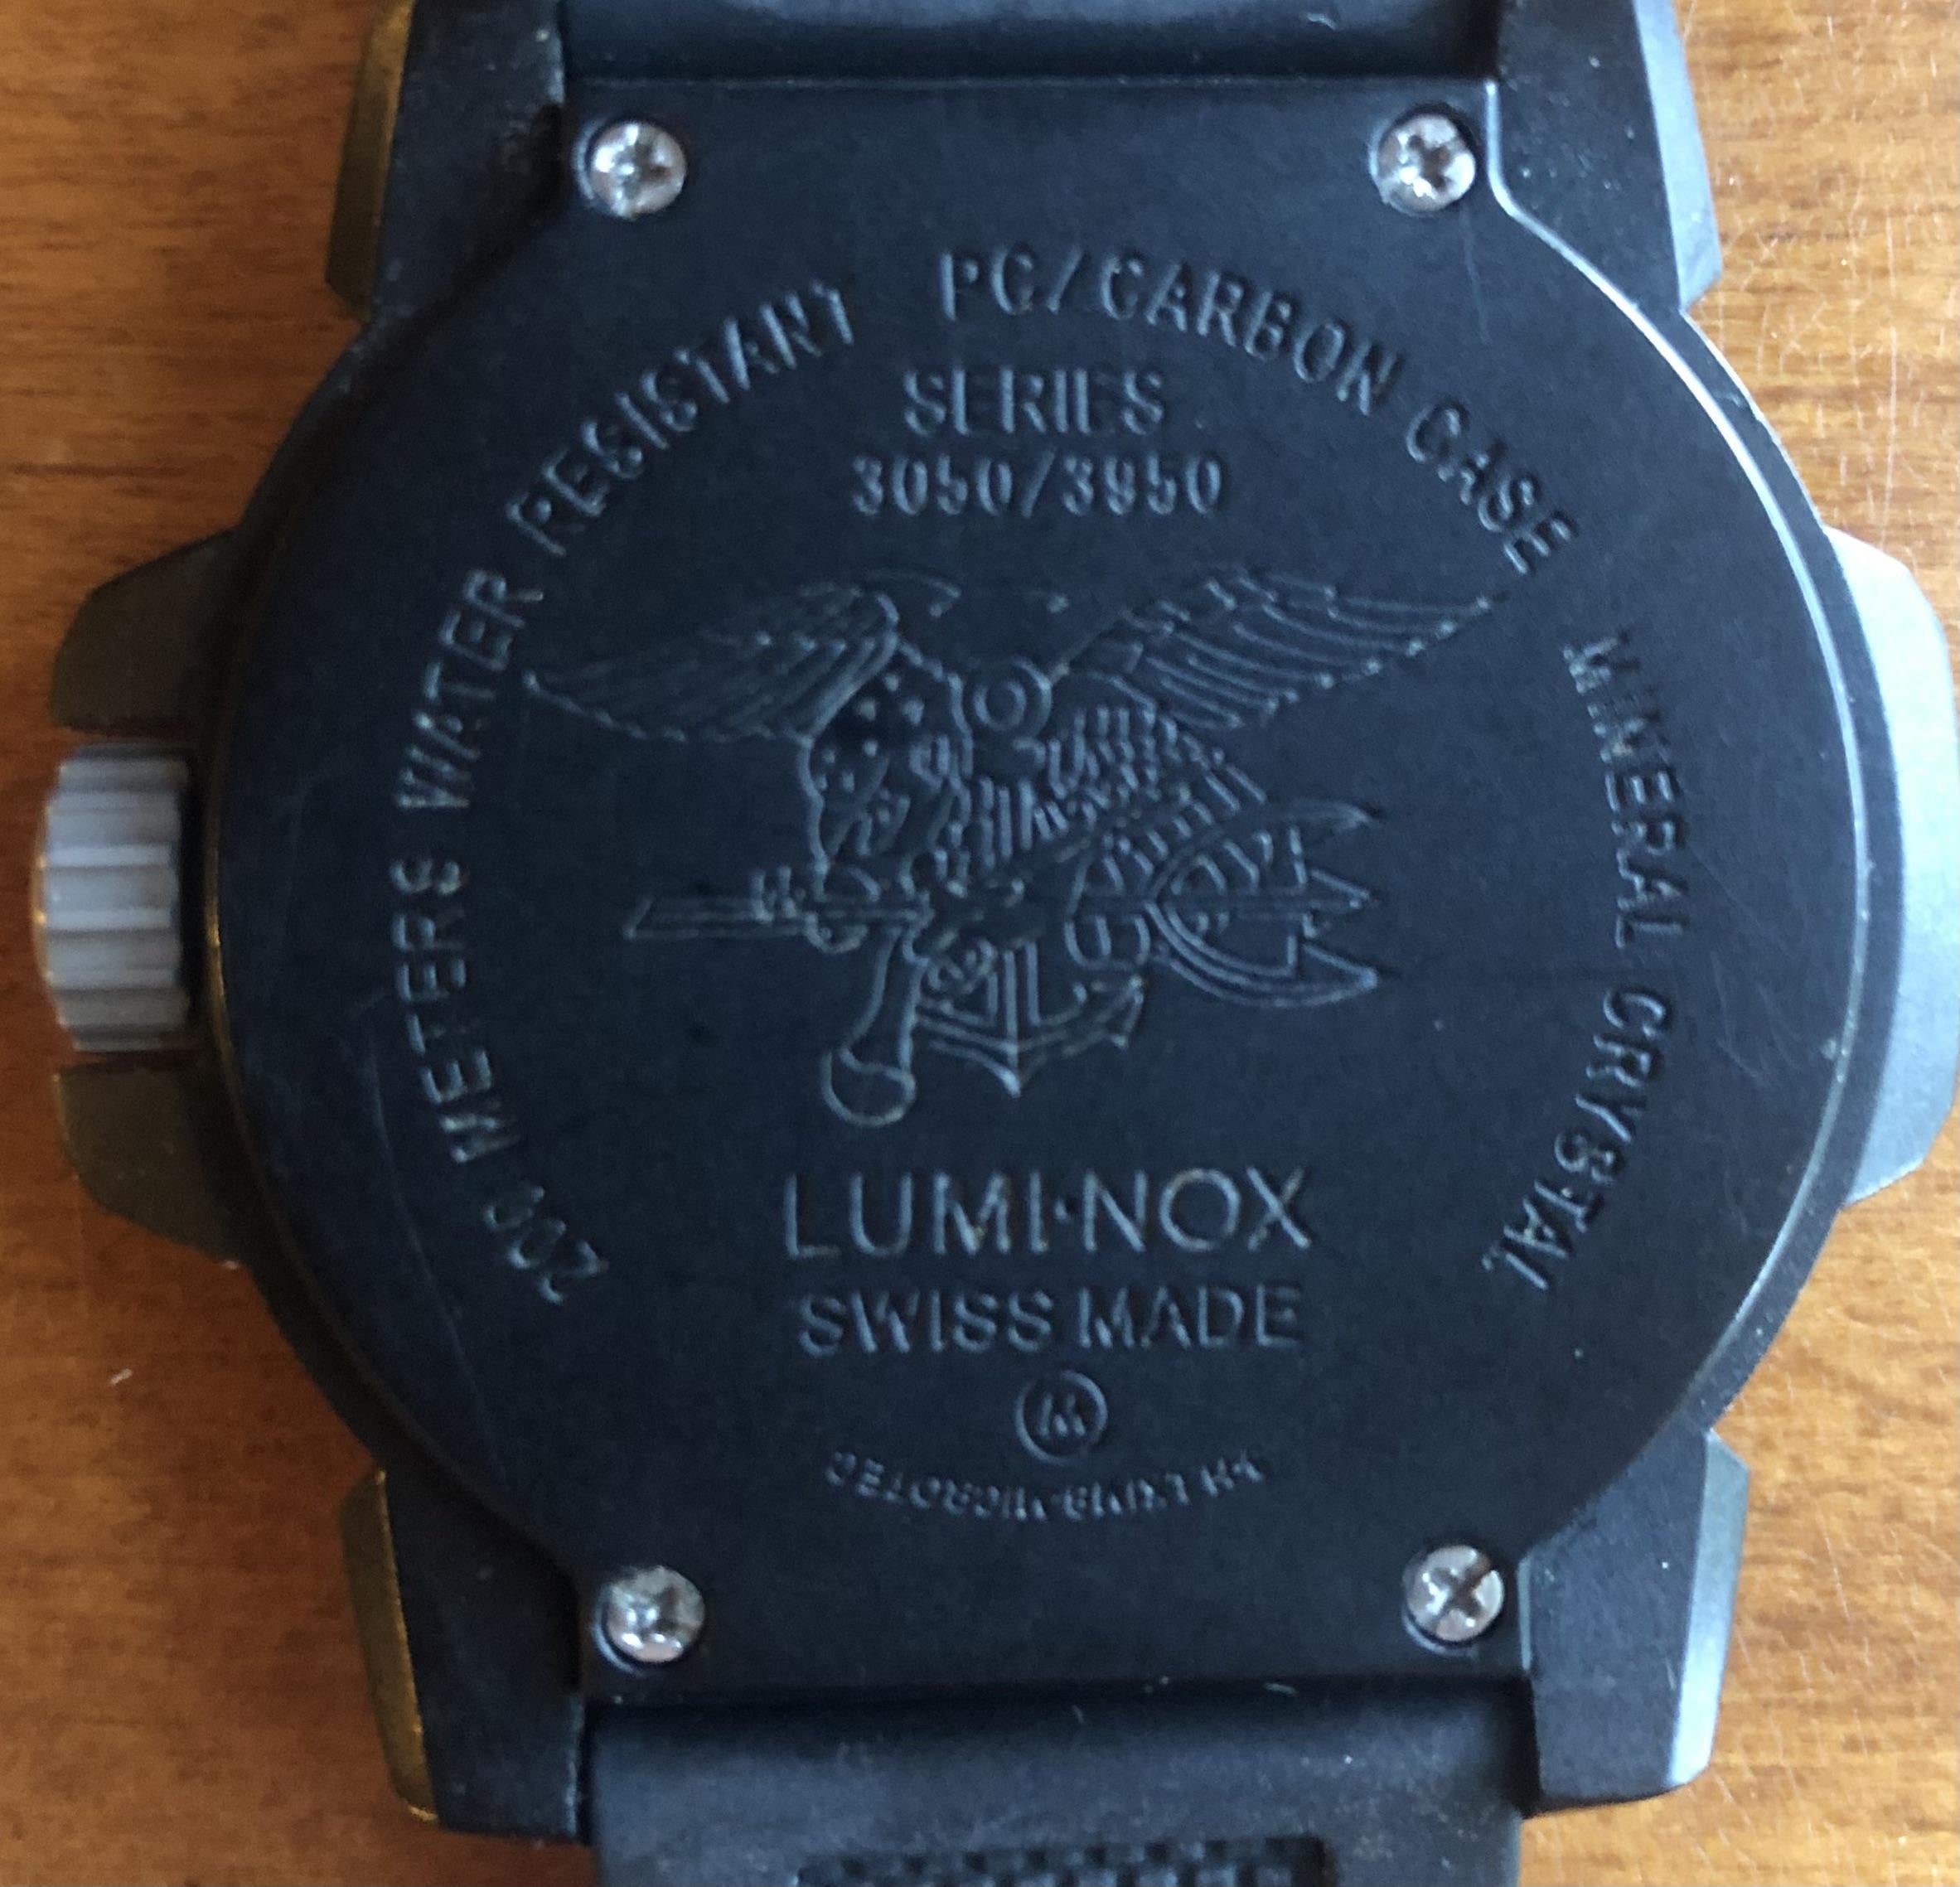 2022最新式 LUMINOX 3050/3950 腕時計 | www.hexistor.com